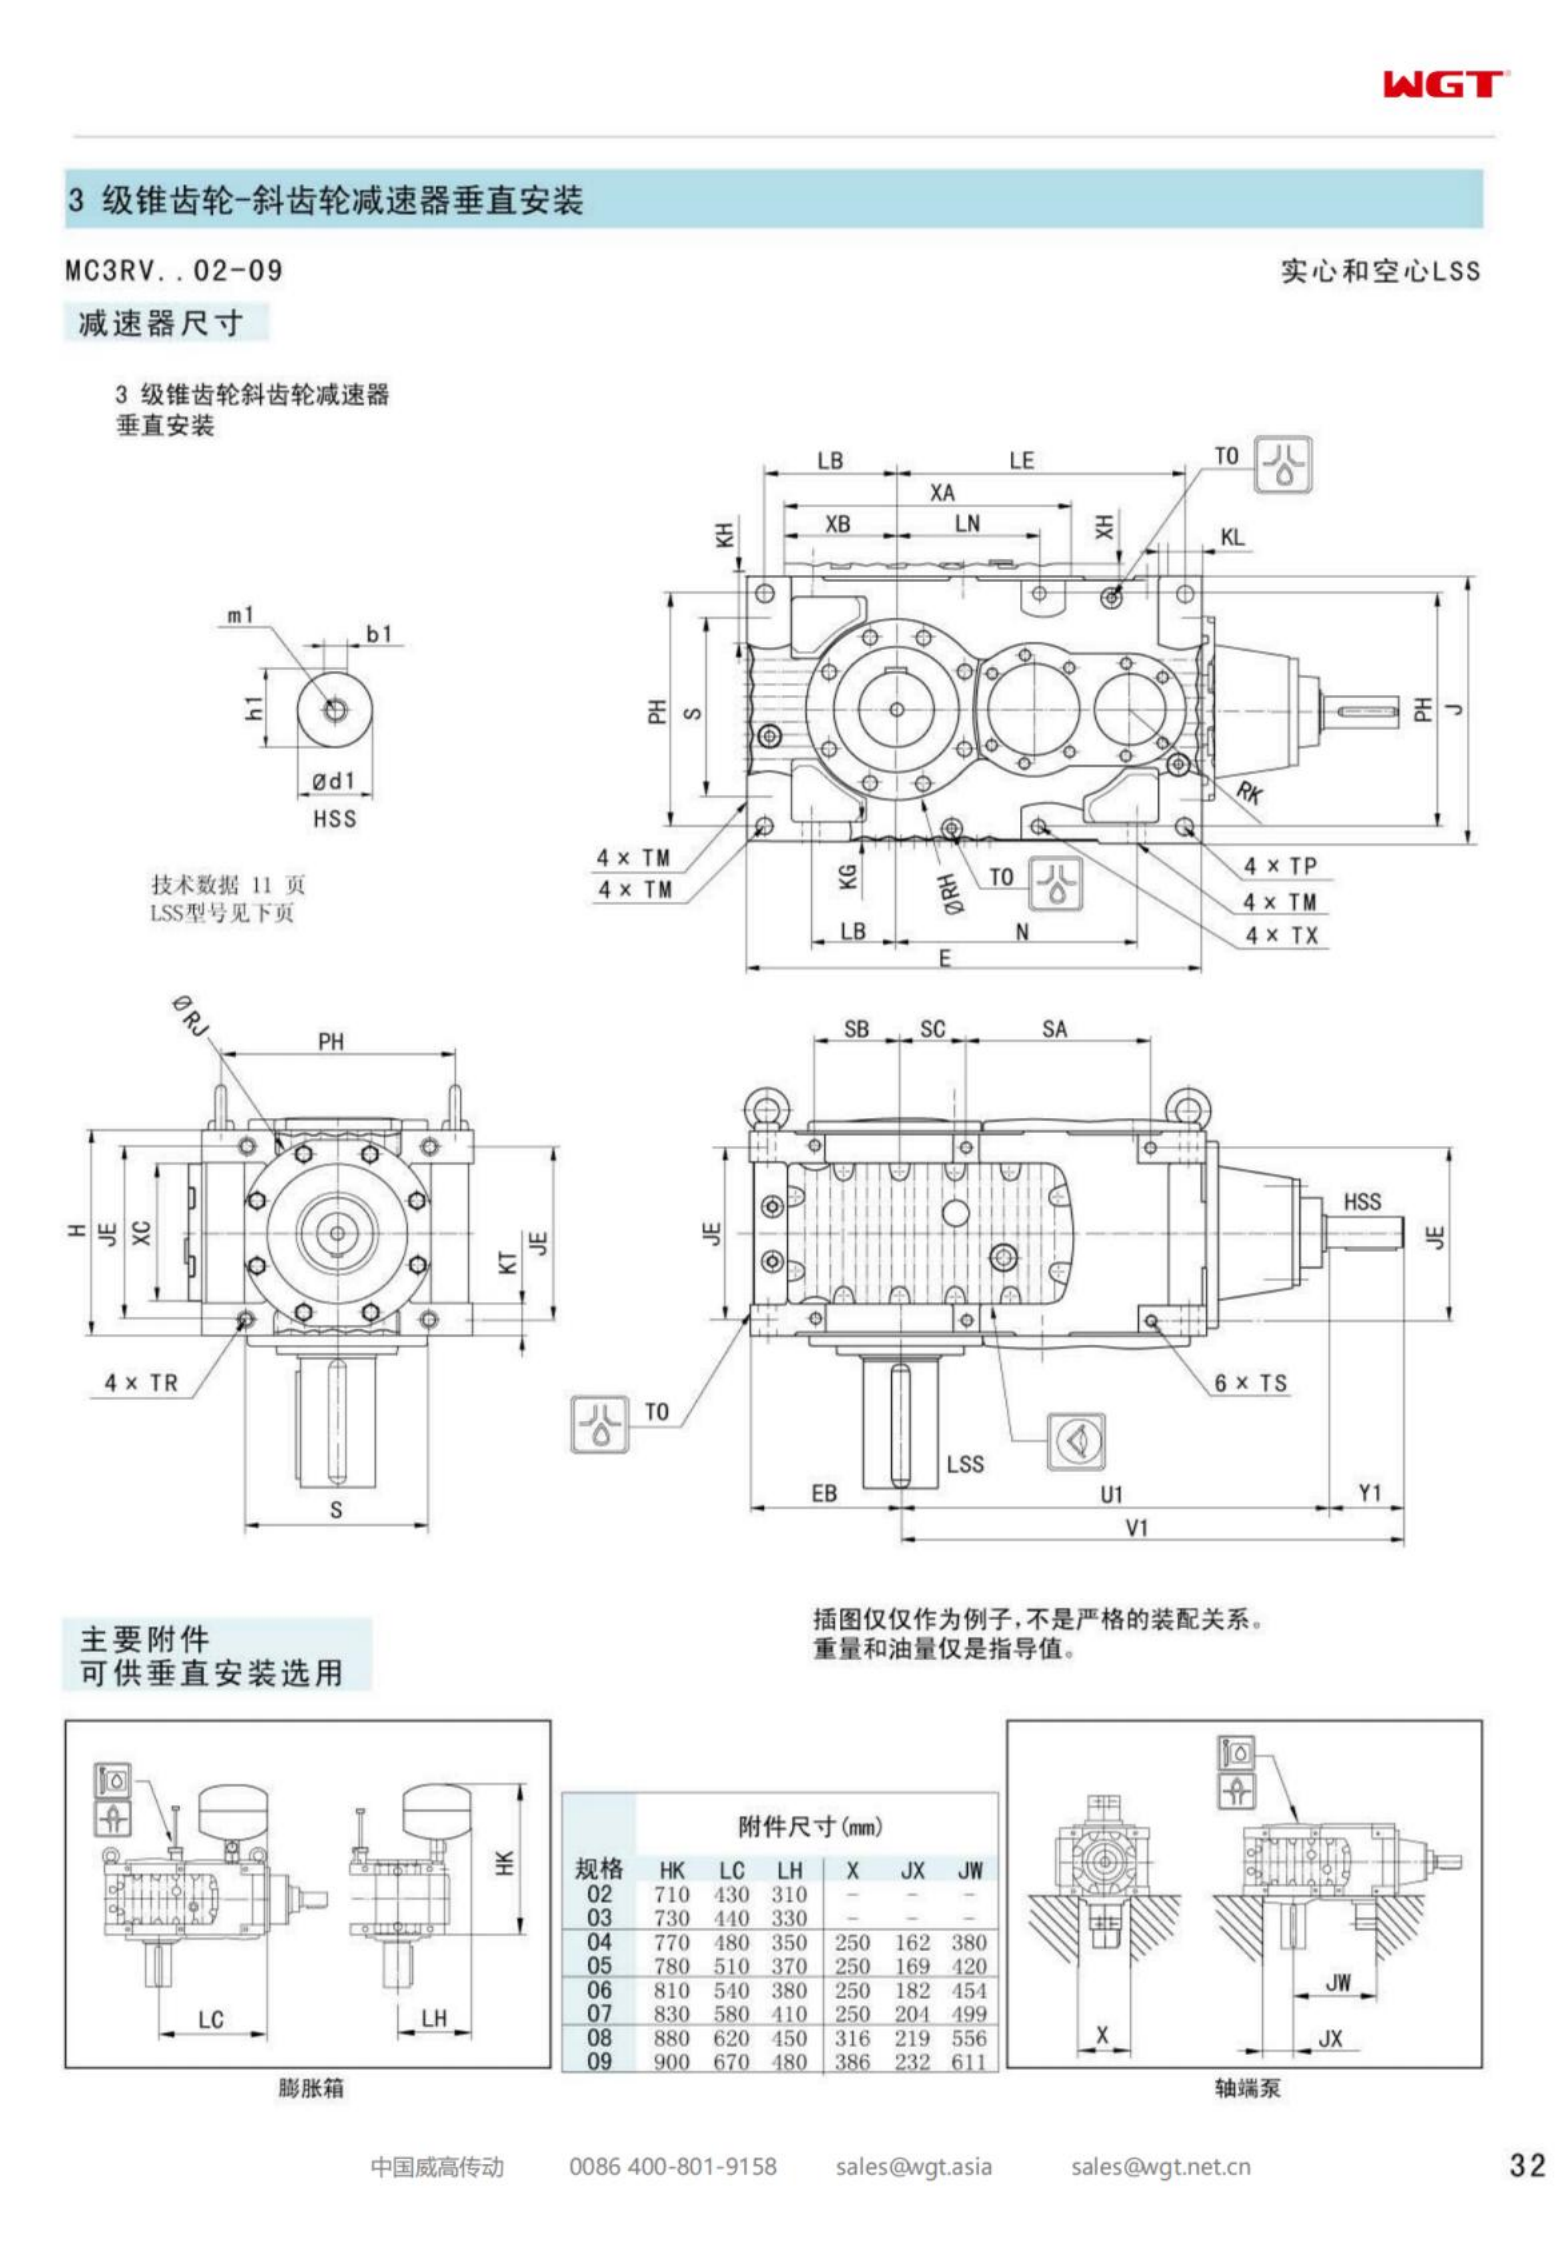 MC3RVSF04 replaces _SEW_MC_Series gearbox (patent)